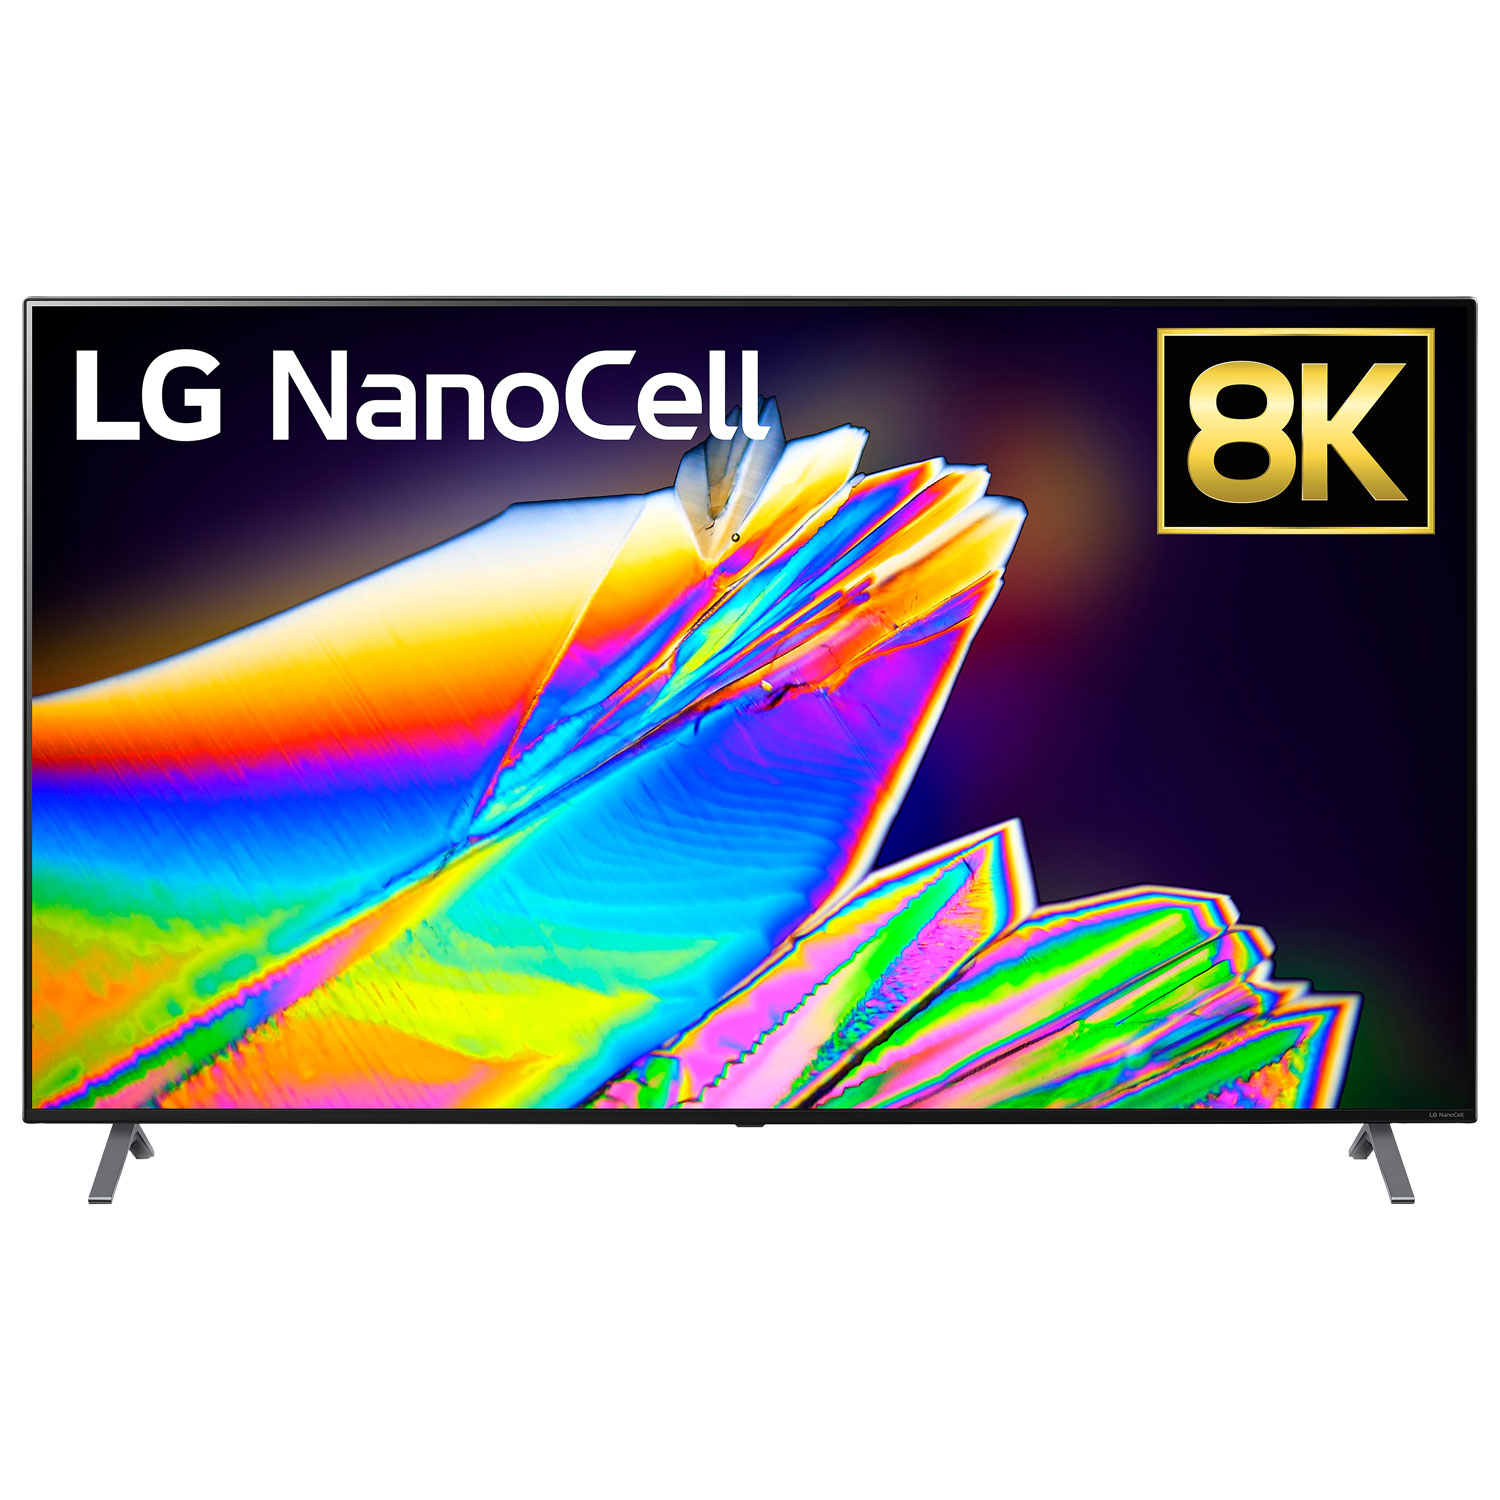 LG NanoCell 75" 8K UHD HDR LED webOS Smart TV (75NANO95) - 2020 - Only at Best Buy